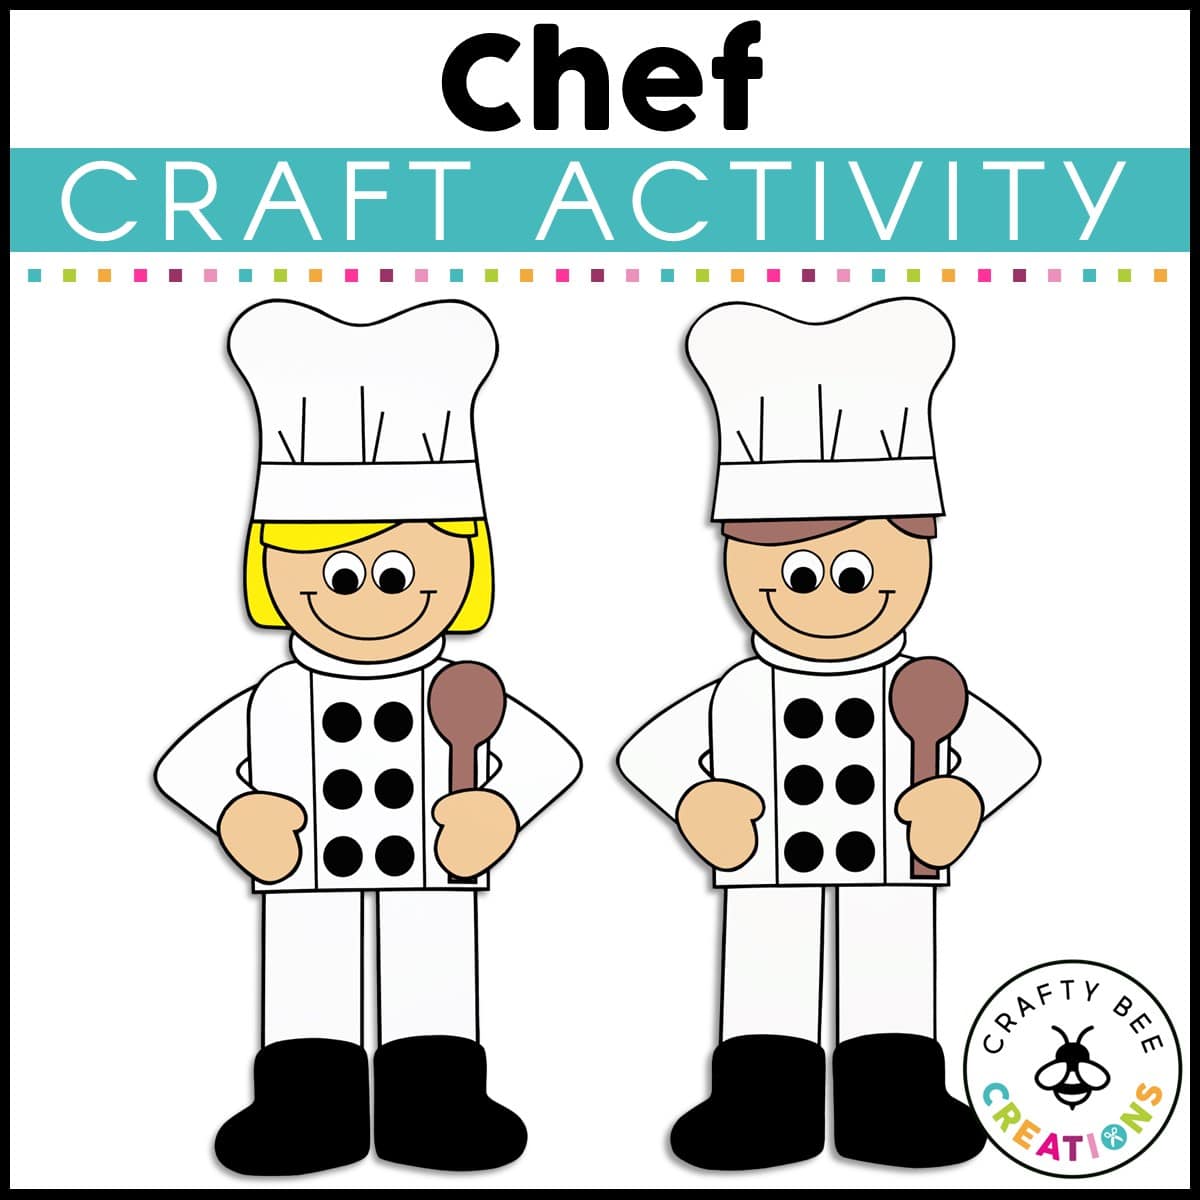 The Chef Craft